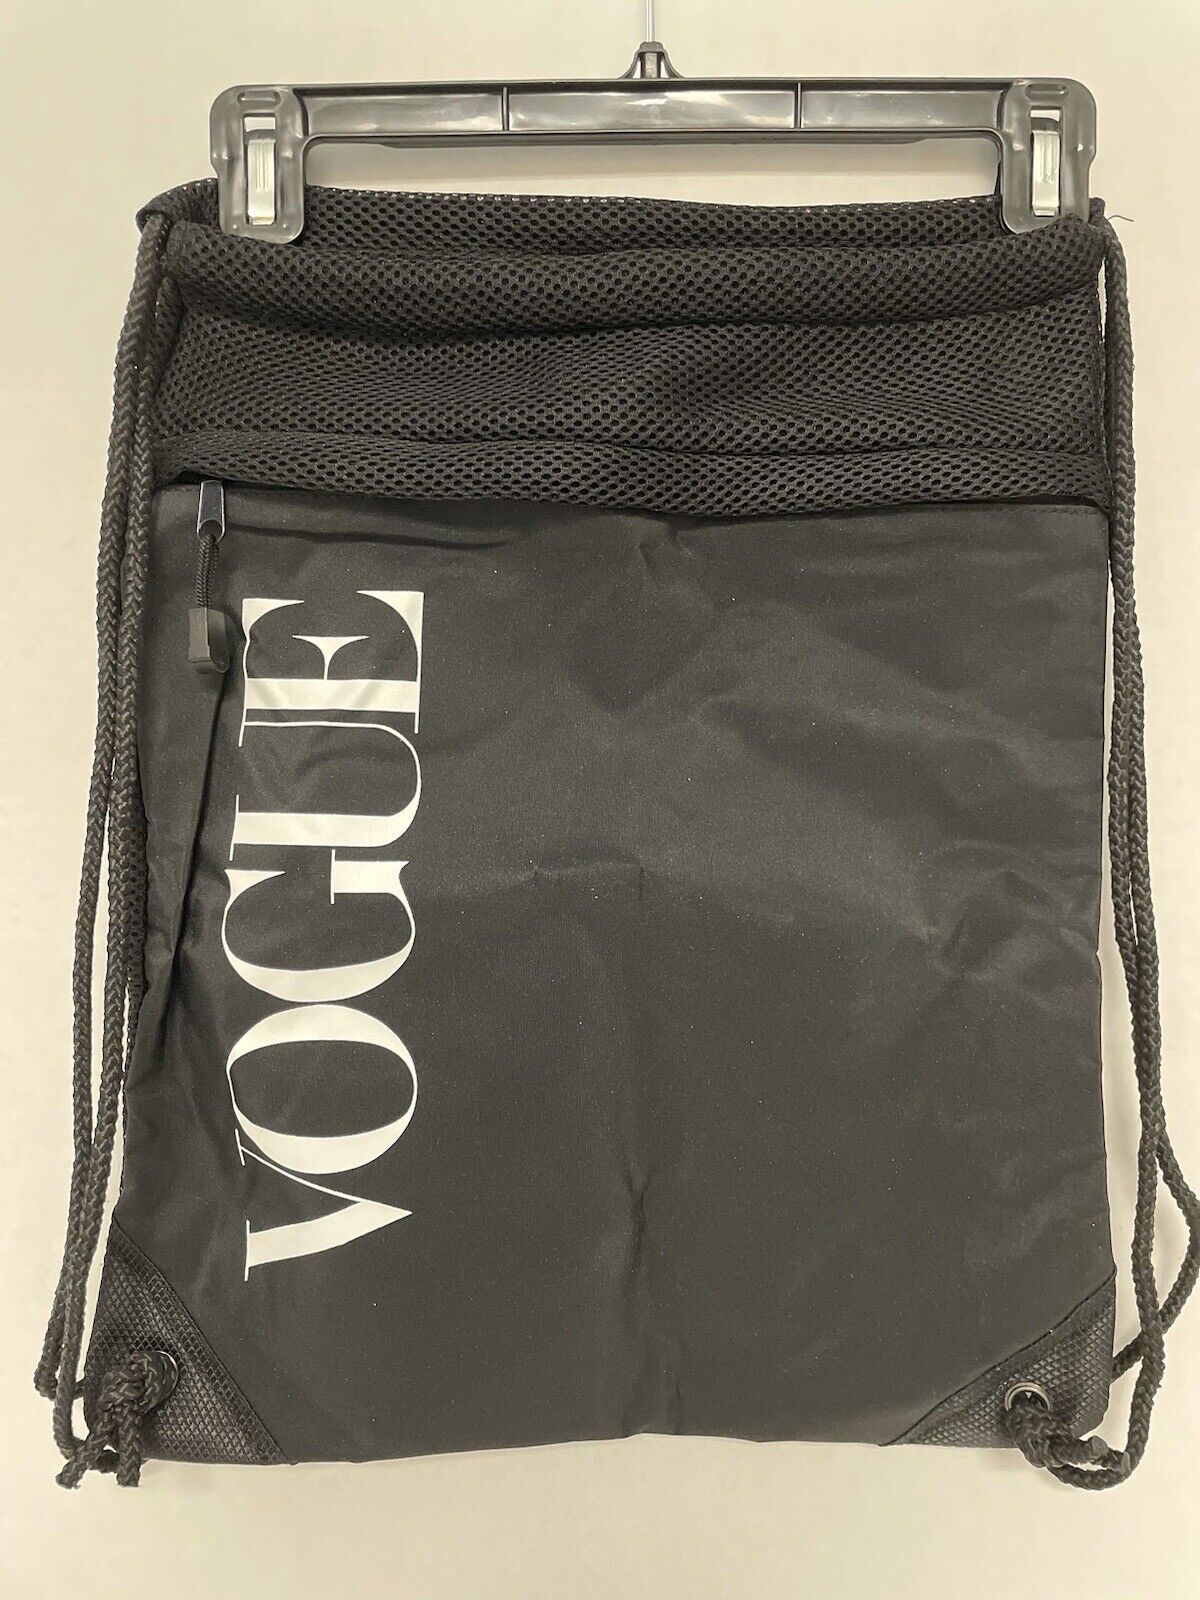 VOGUE Magazine Tote Bag Knapsack Black Drawstring + Zipper Advertising NEW